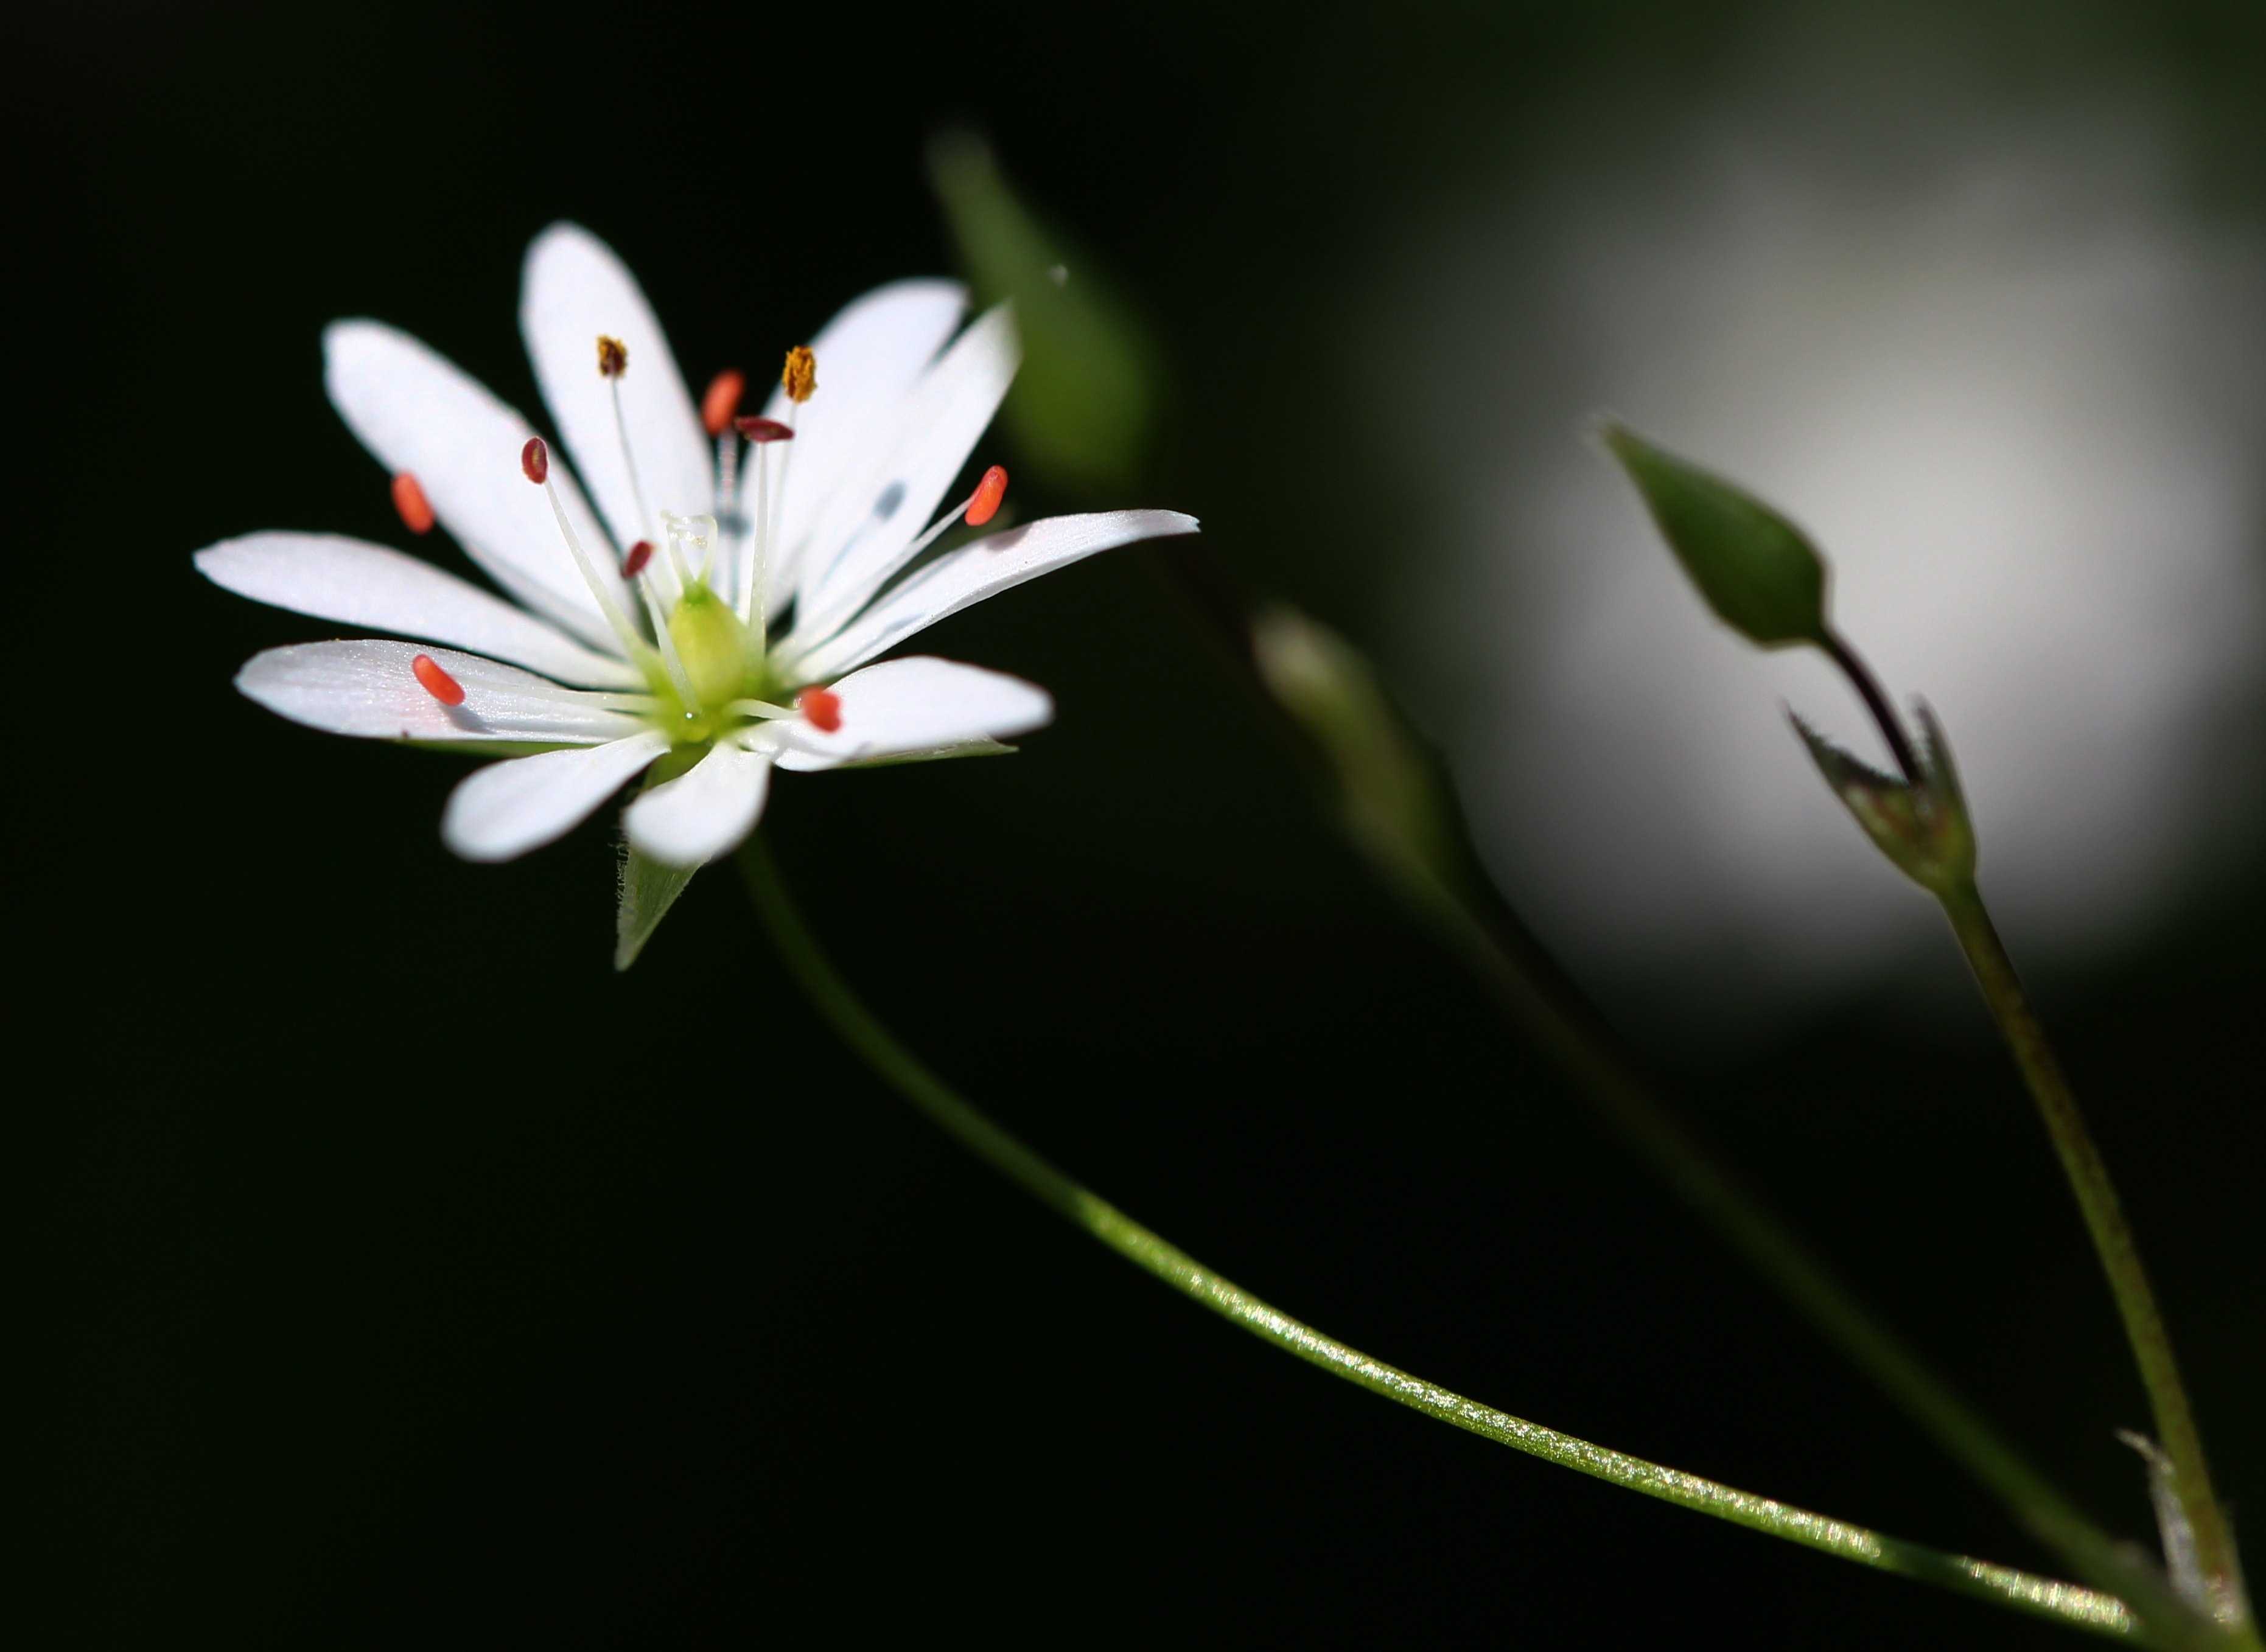 white petaled flower with stigmas close-up photo